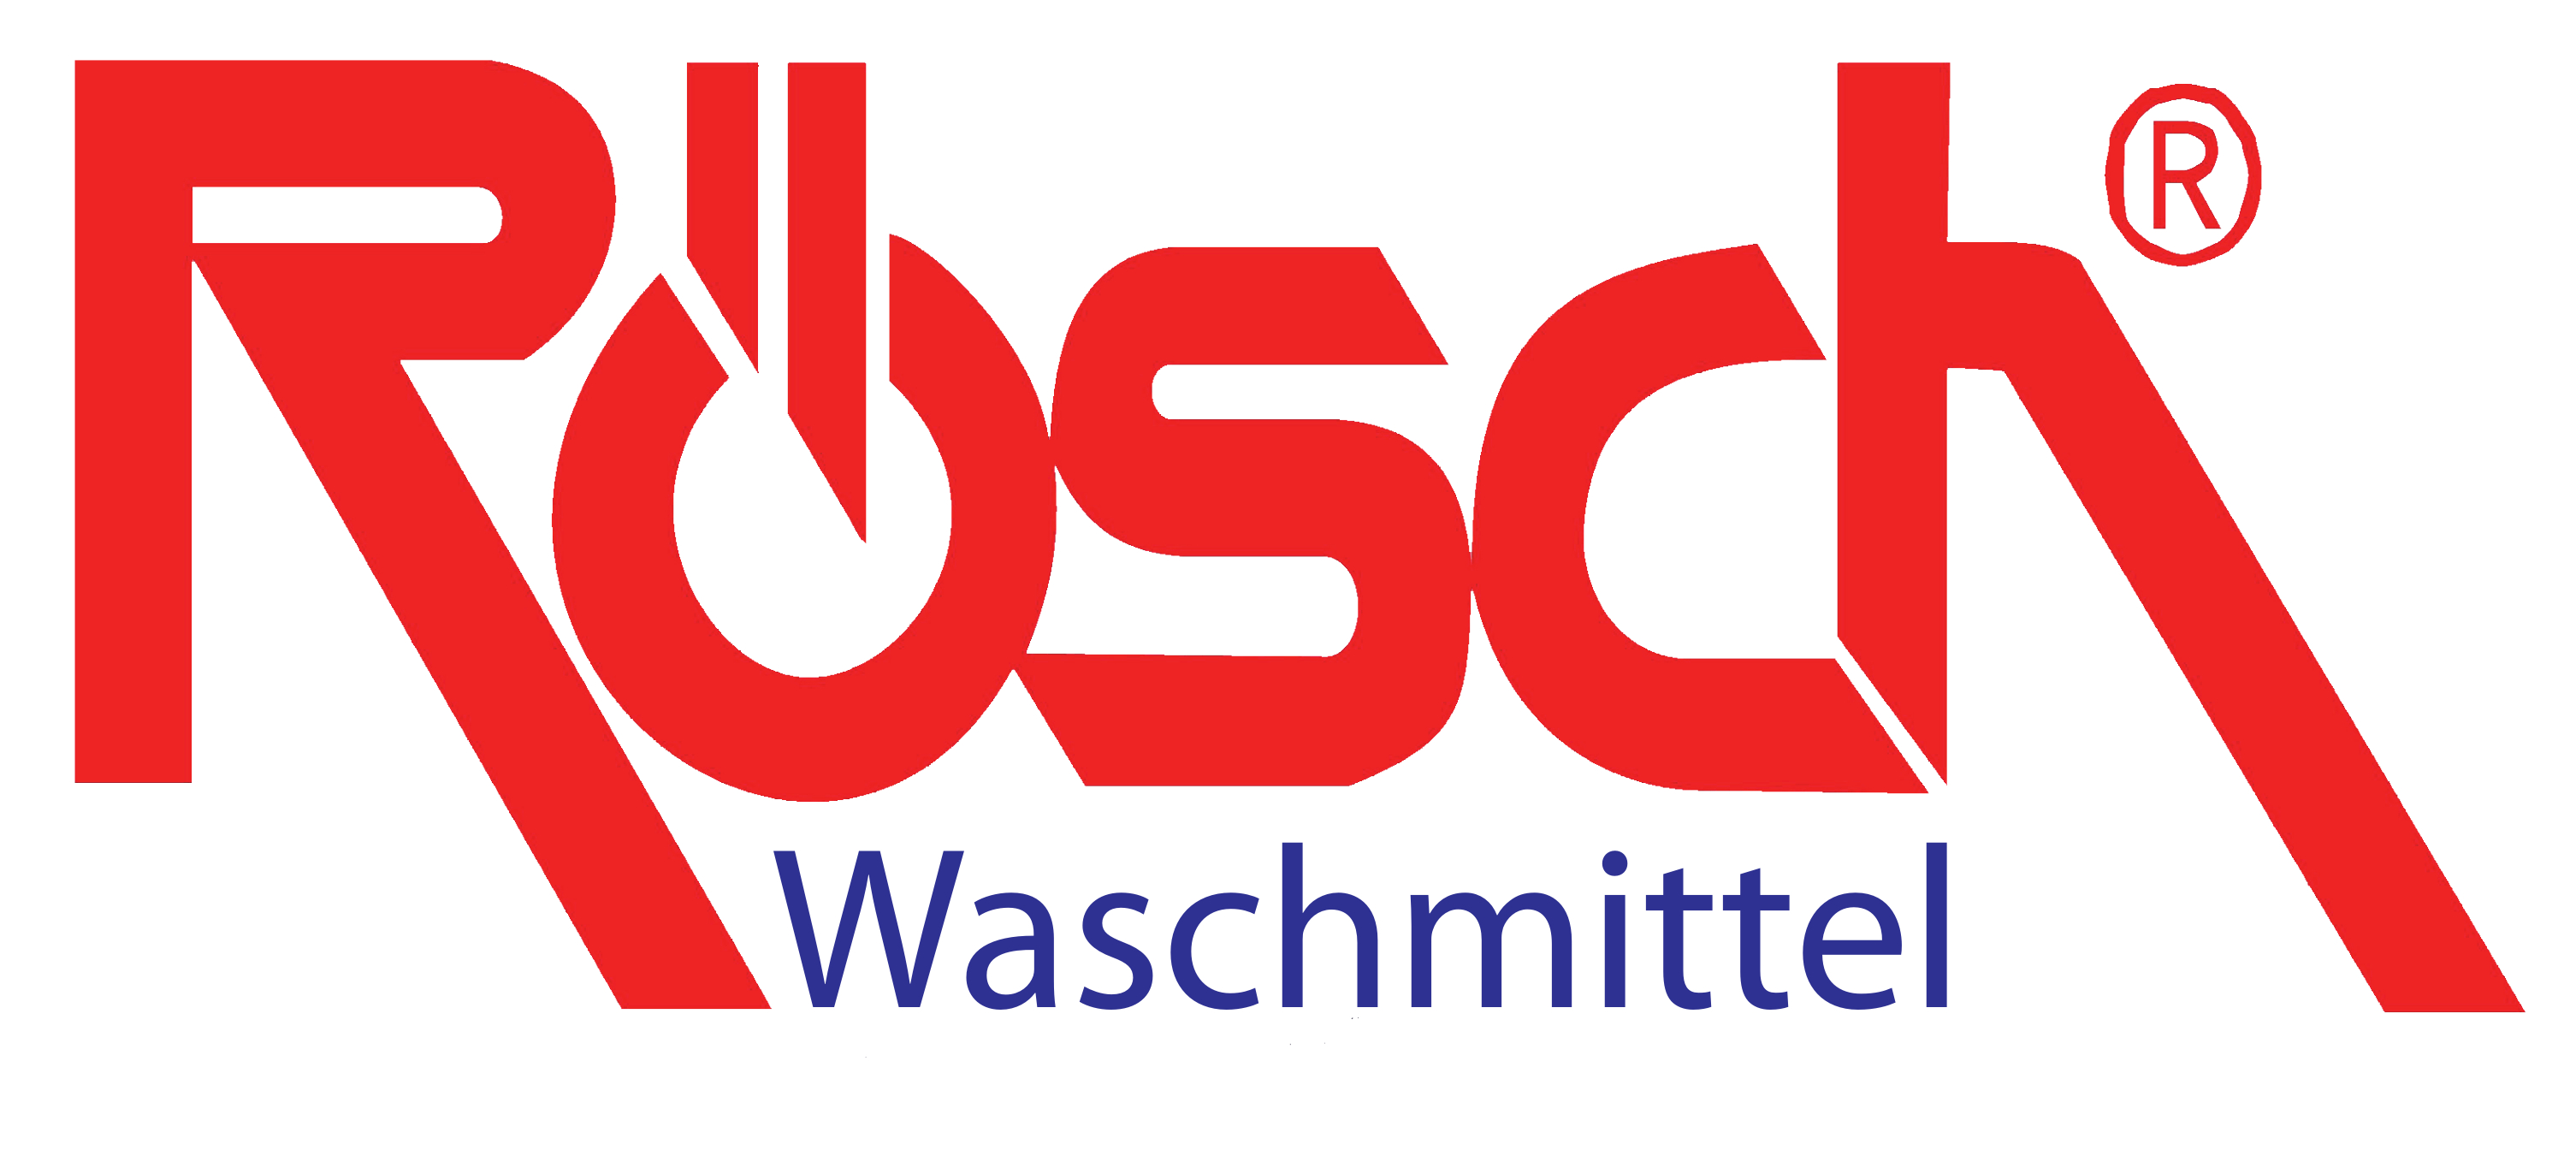 Rösch Germany GmbH